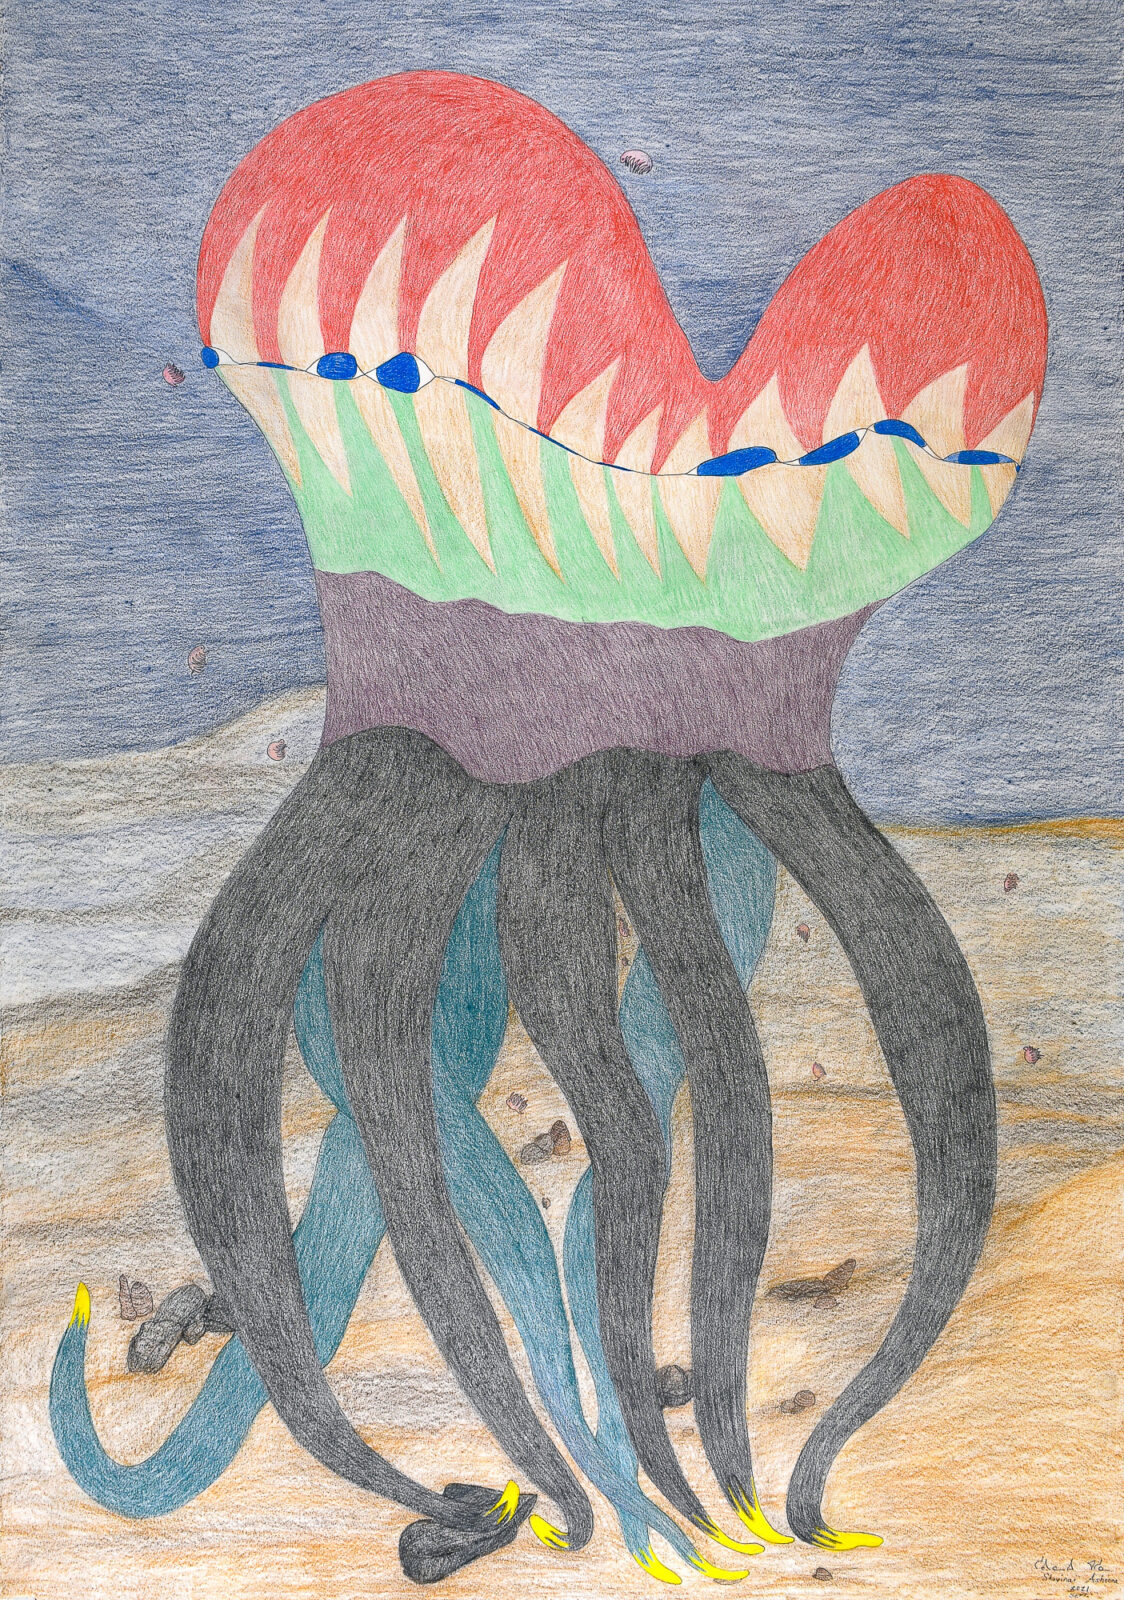 Shuvinai Ashoona - Untitled (surreal Octopus)